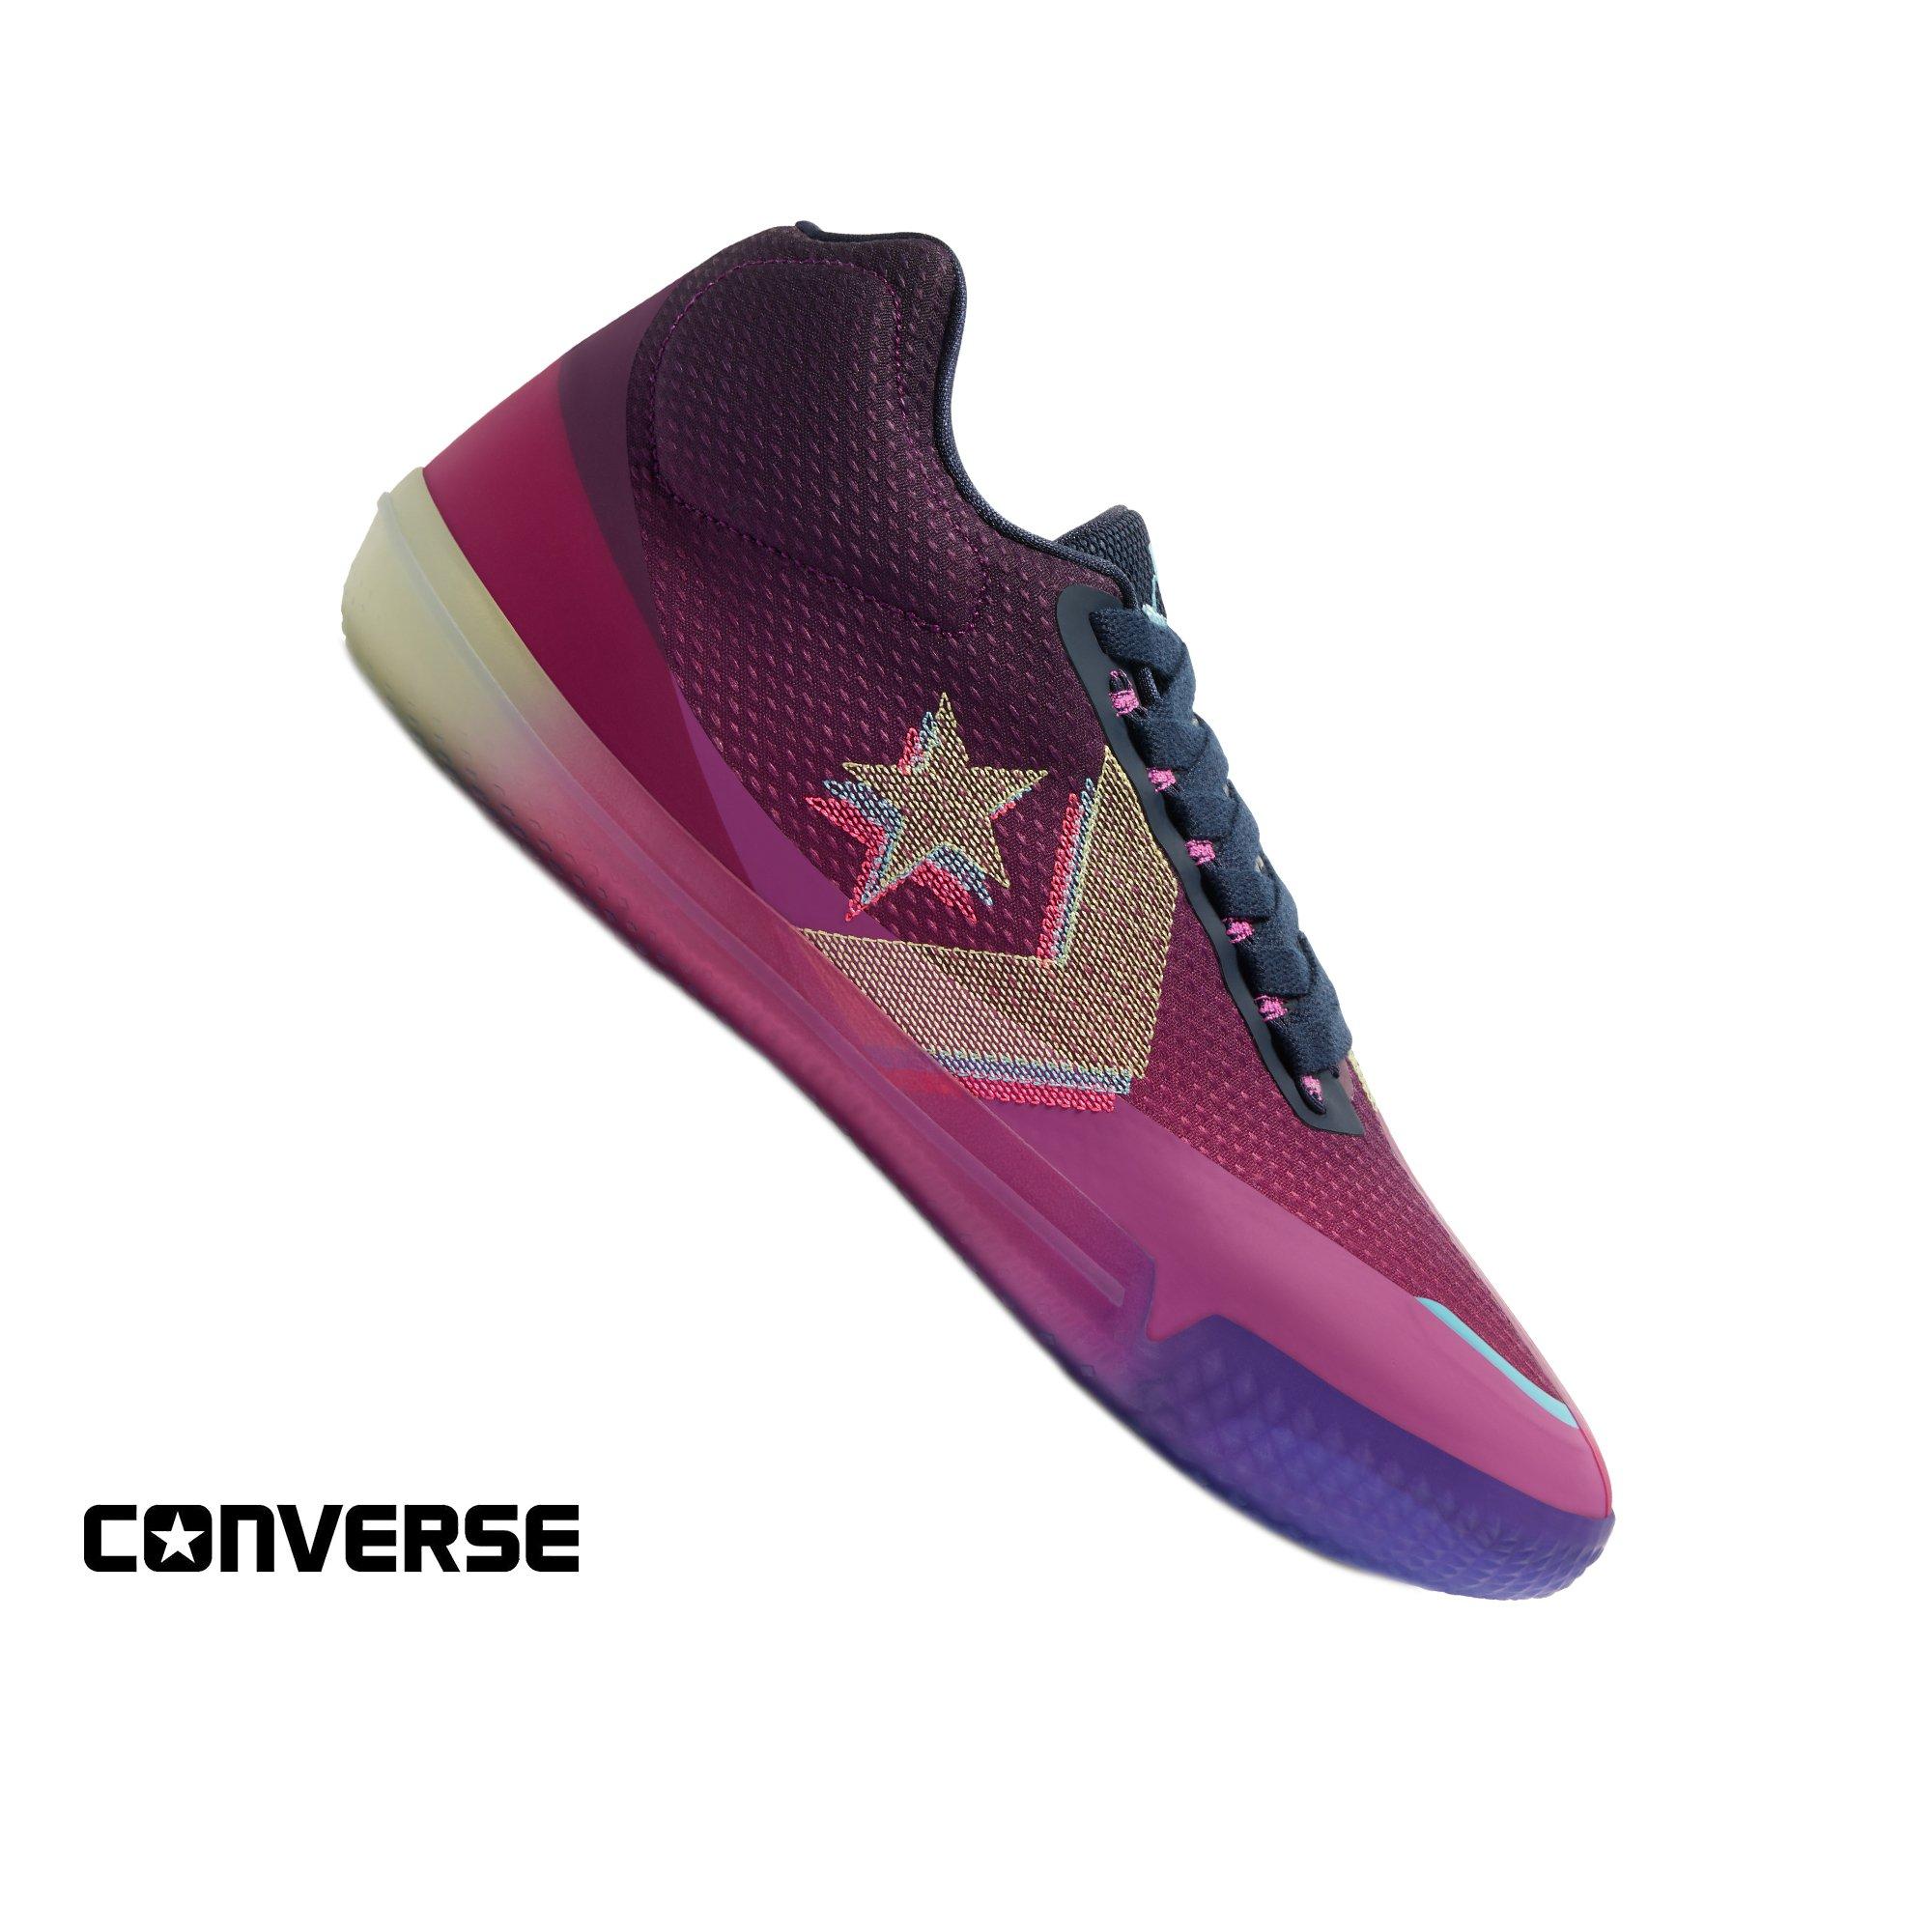 converse men's basketball shoes